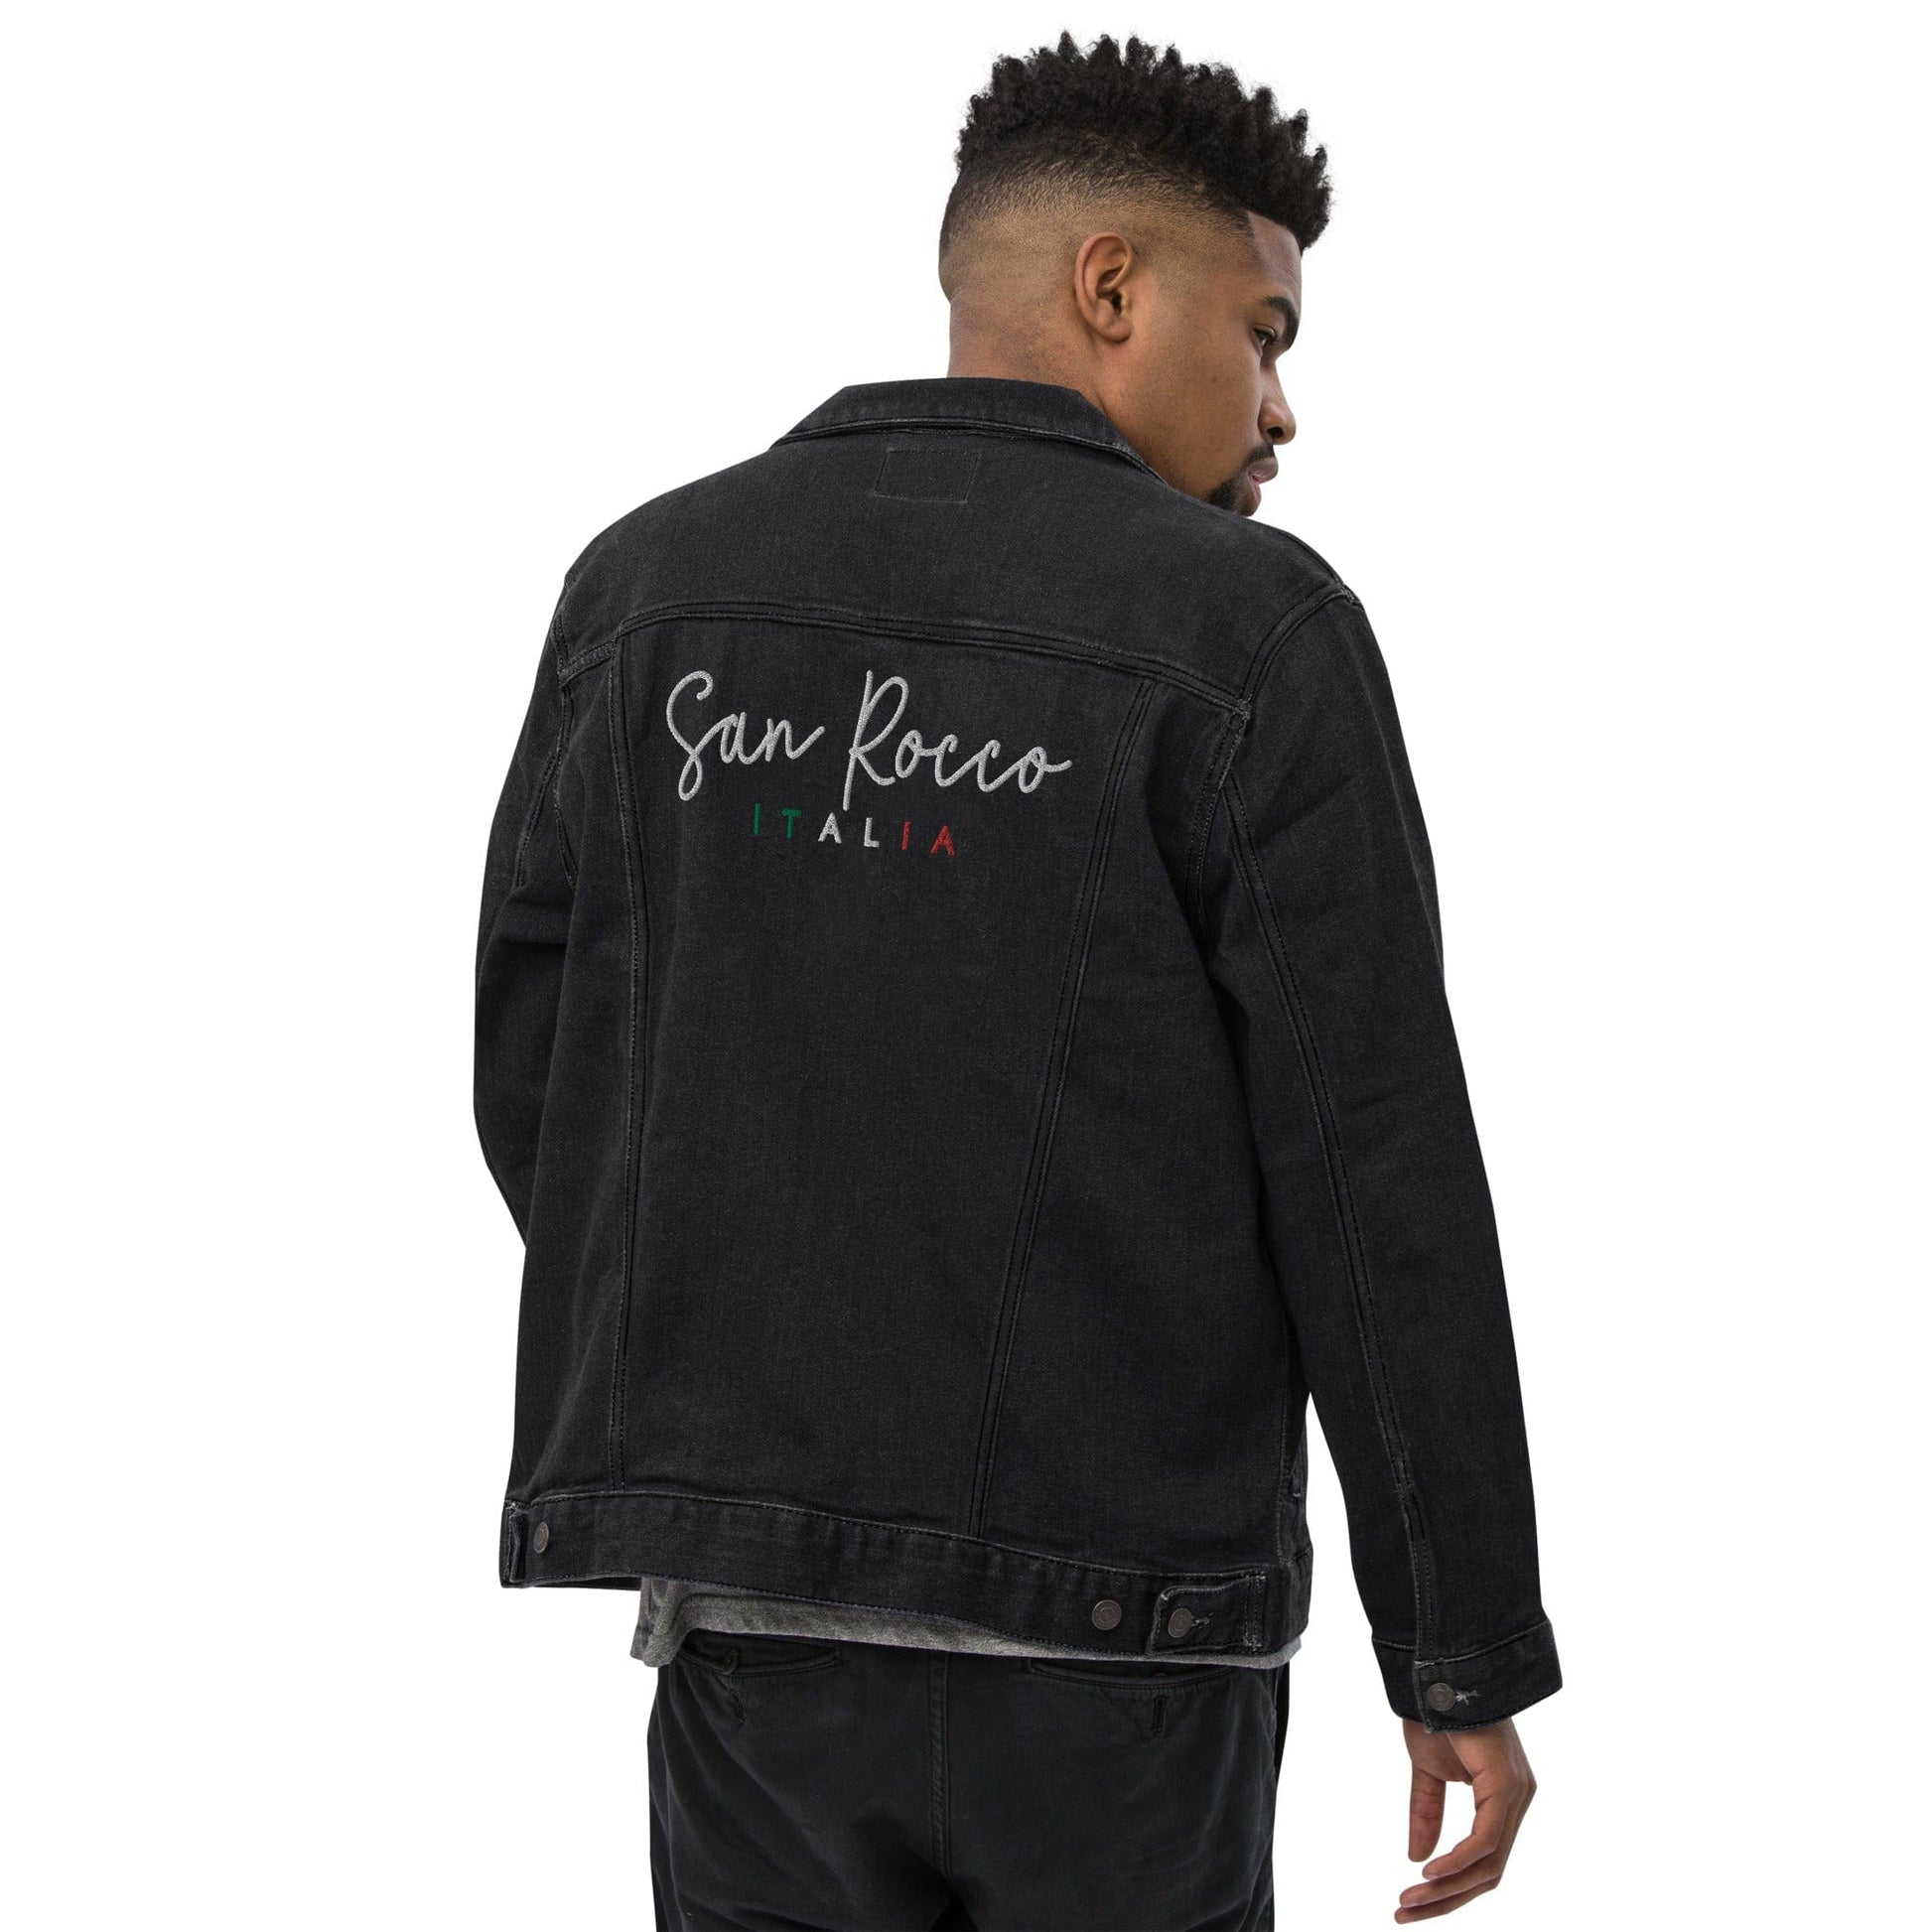 San Rocco Italia embroidered denim jacket - unisex -  - San Rocco Italia